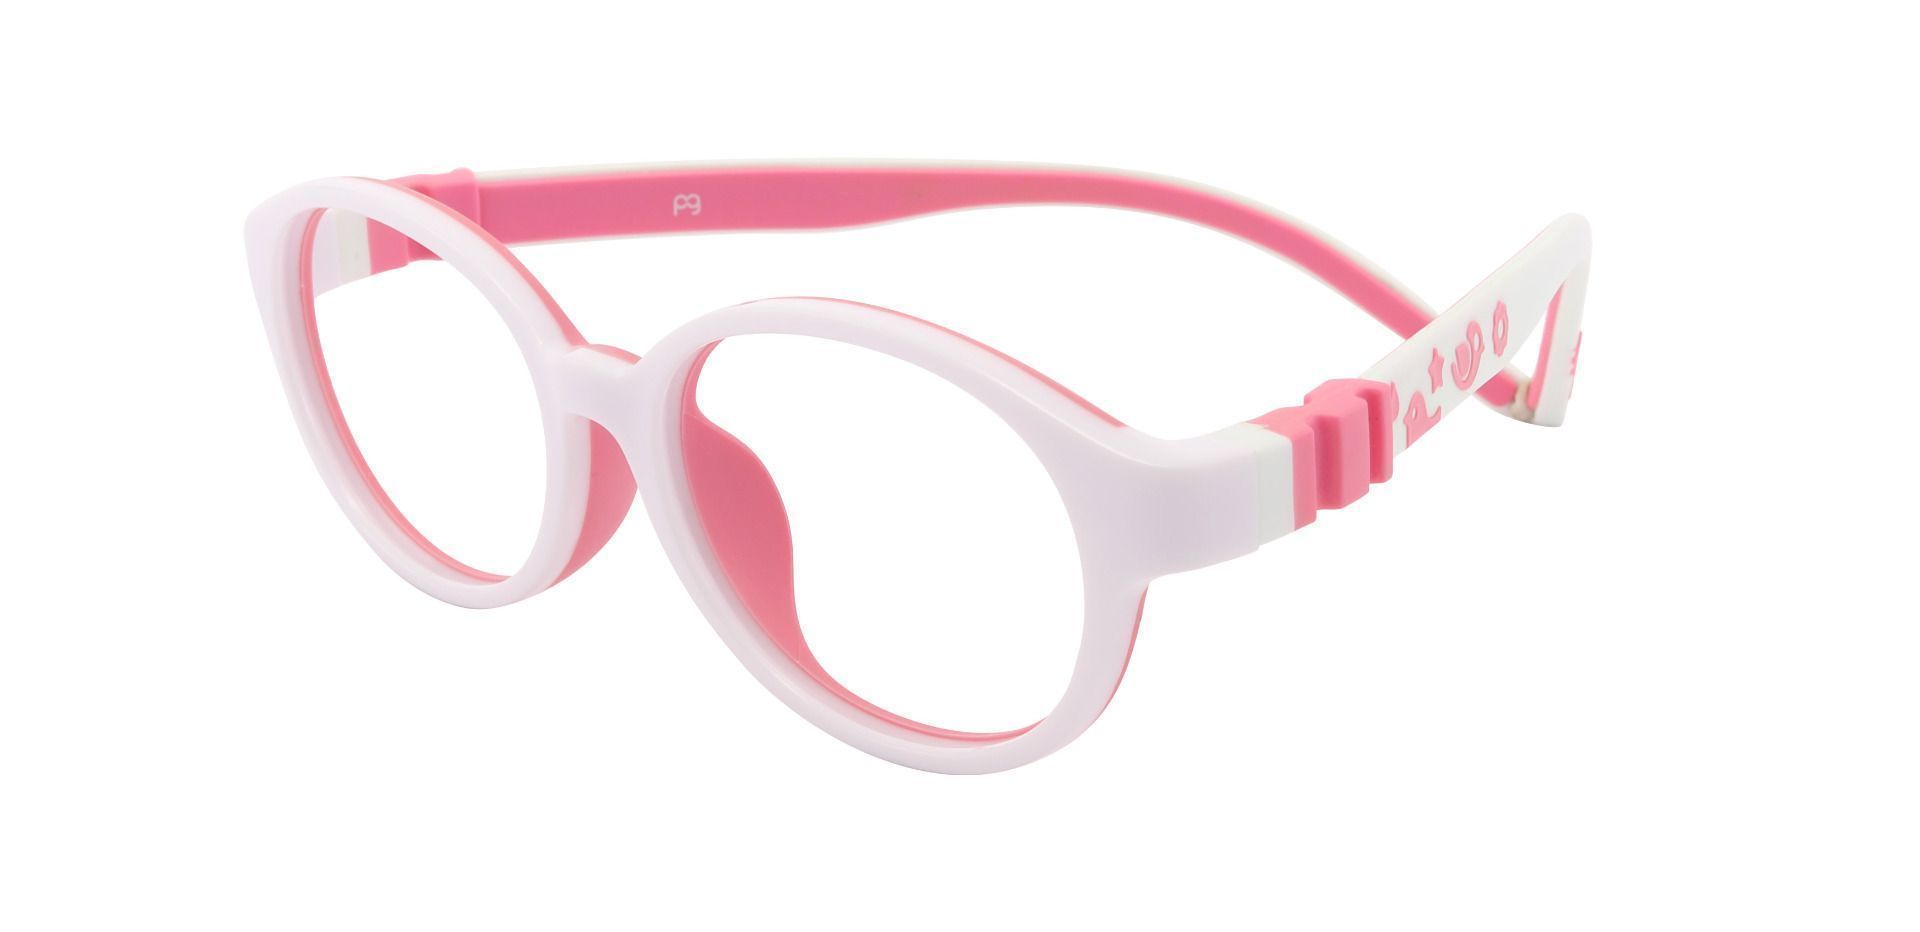 Sweeny Oval Prescription Glasses - White